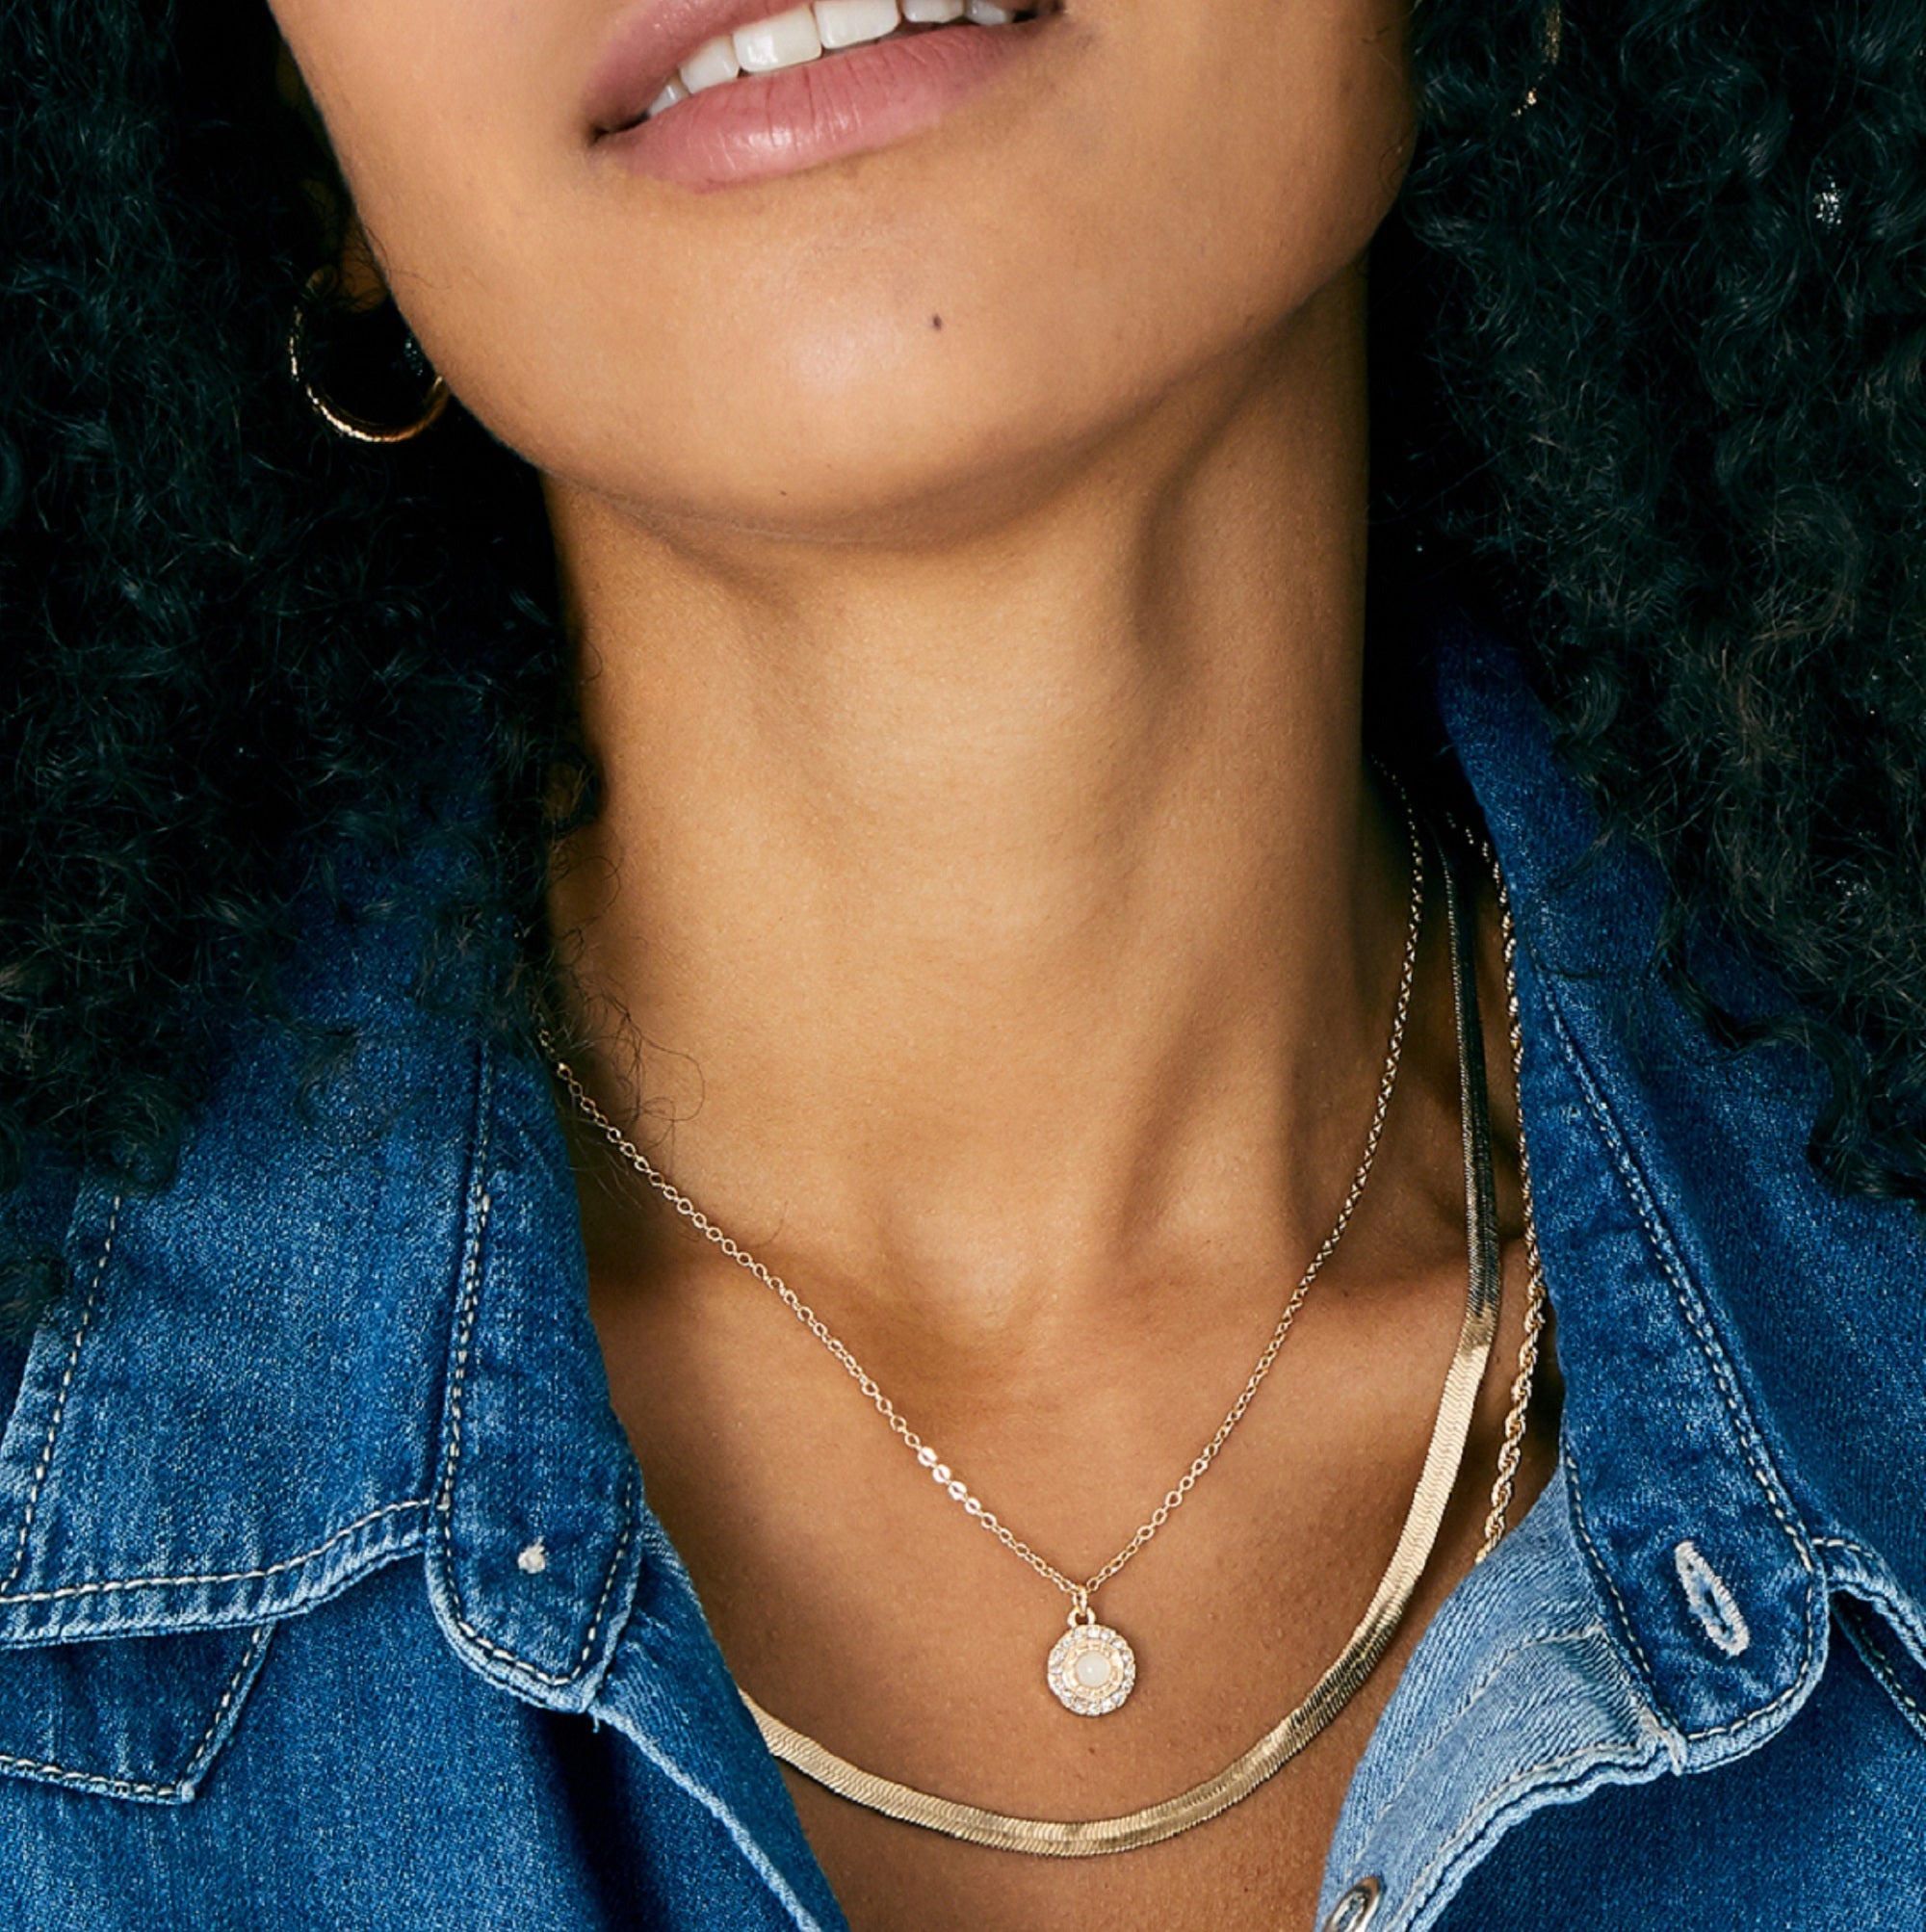 Small Pavé Diamond Heart Necklace, 14K Yellow Gold – Fortunoff Fine Jewelry